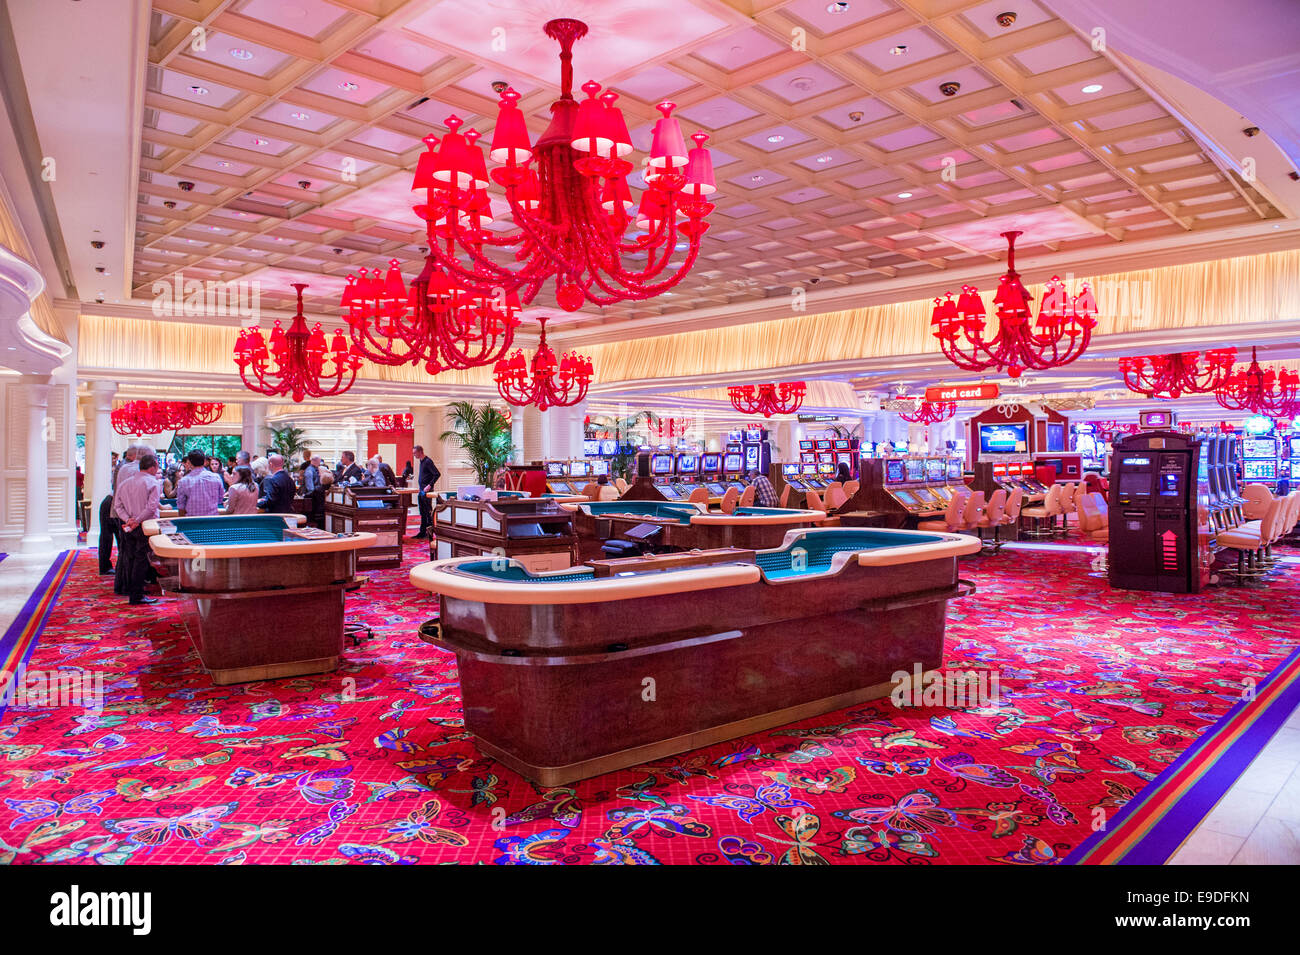 The interior of Encore Hotel and casino in Las Vegas Stock Photo - Alamy